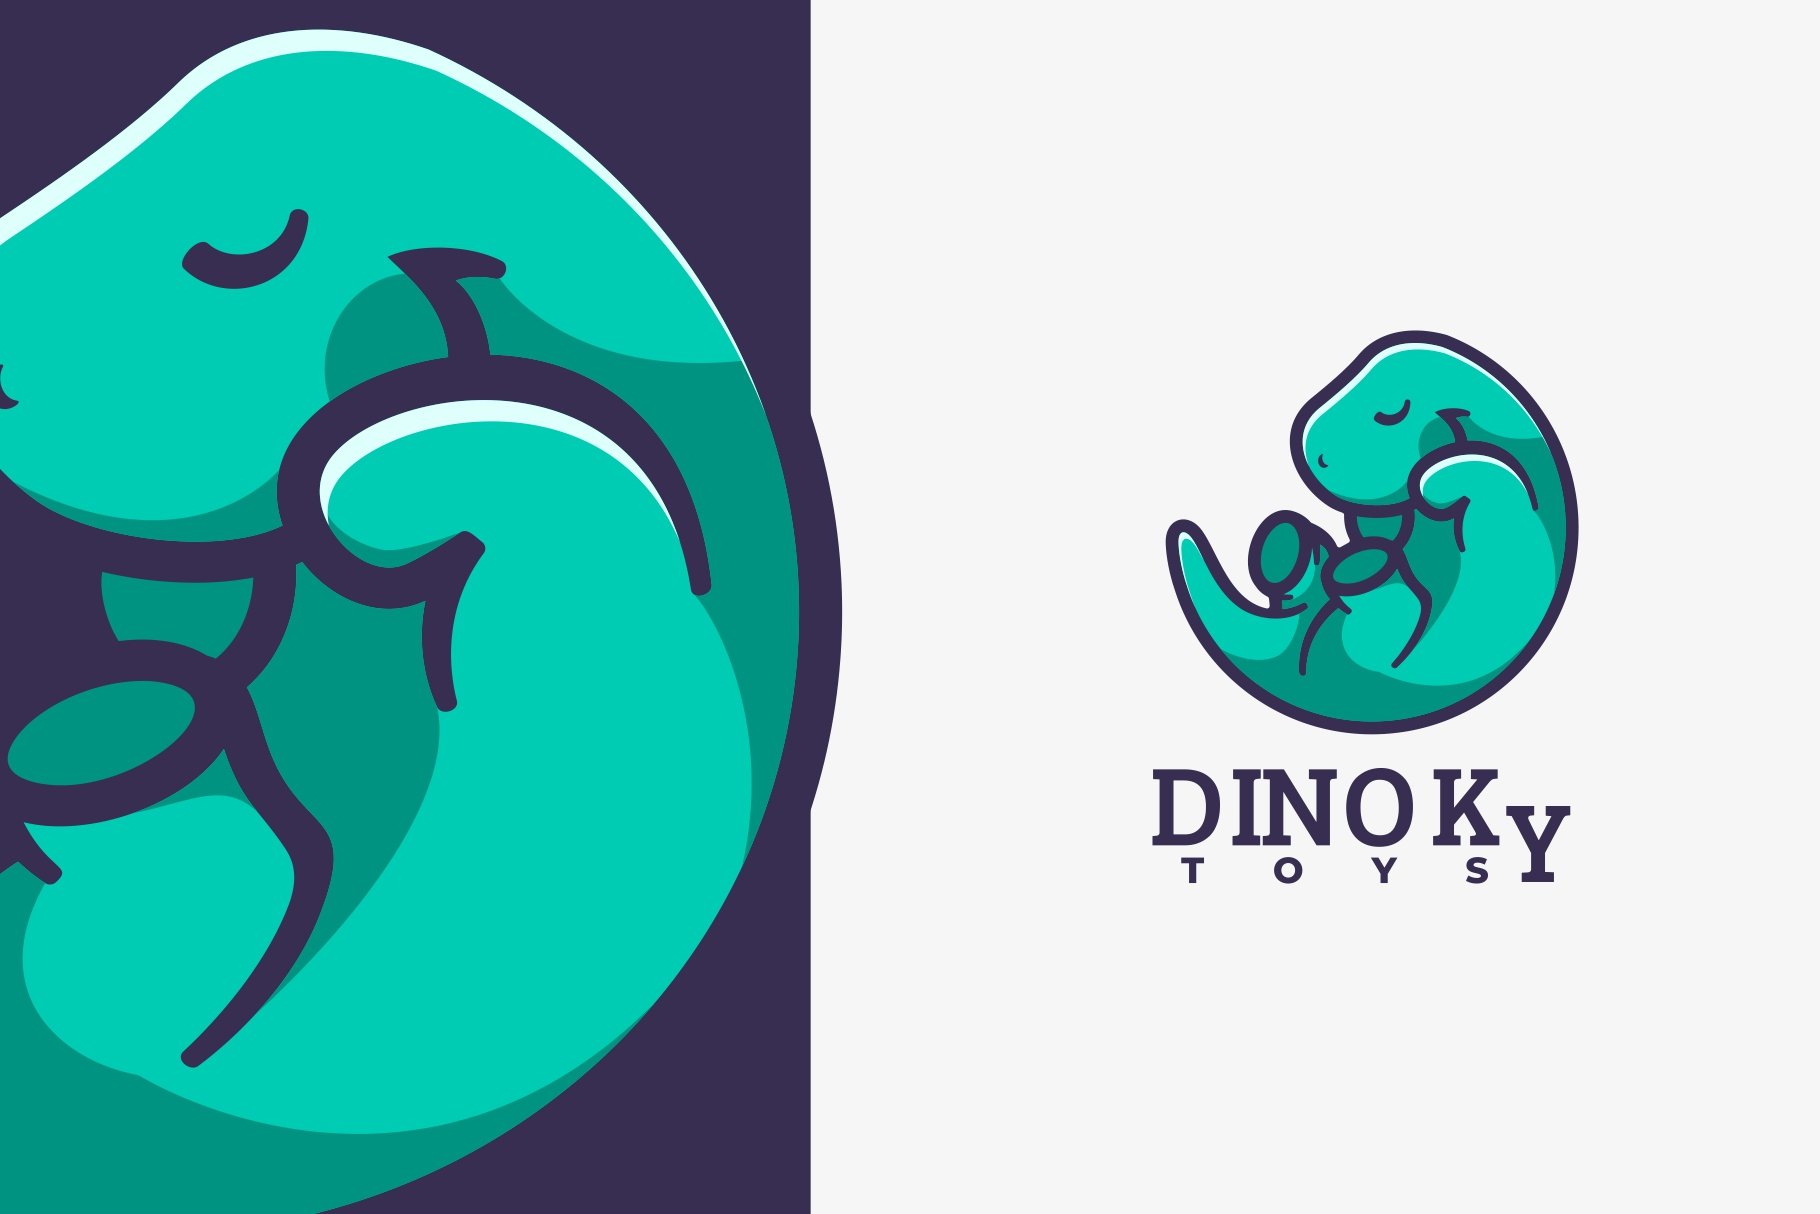 Dinosaur Simple Mascot Logo cover image.